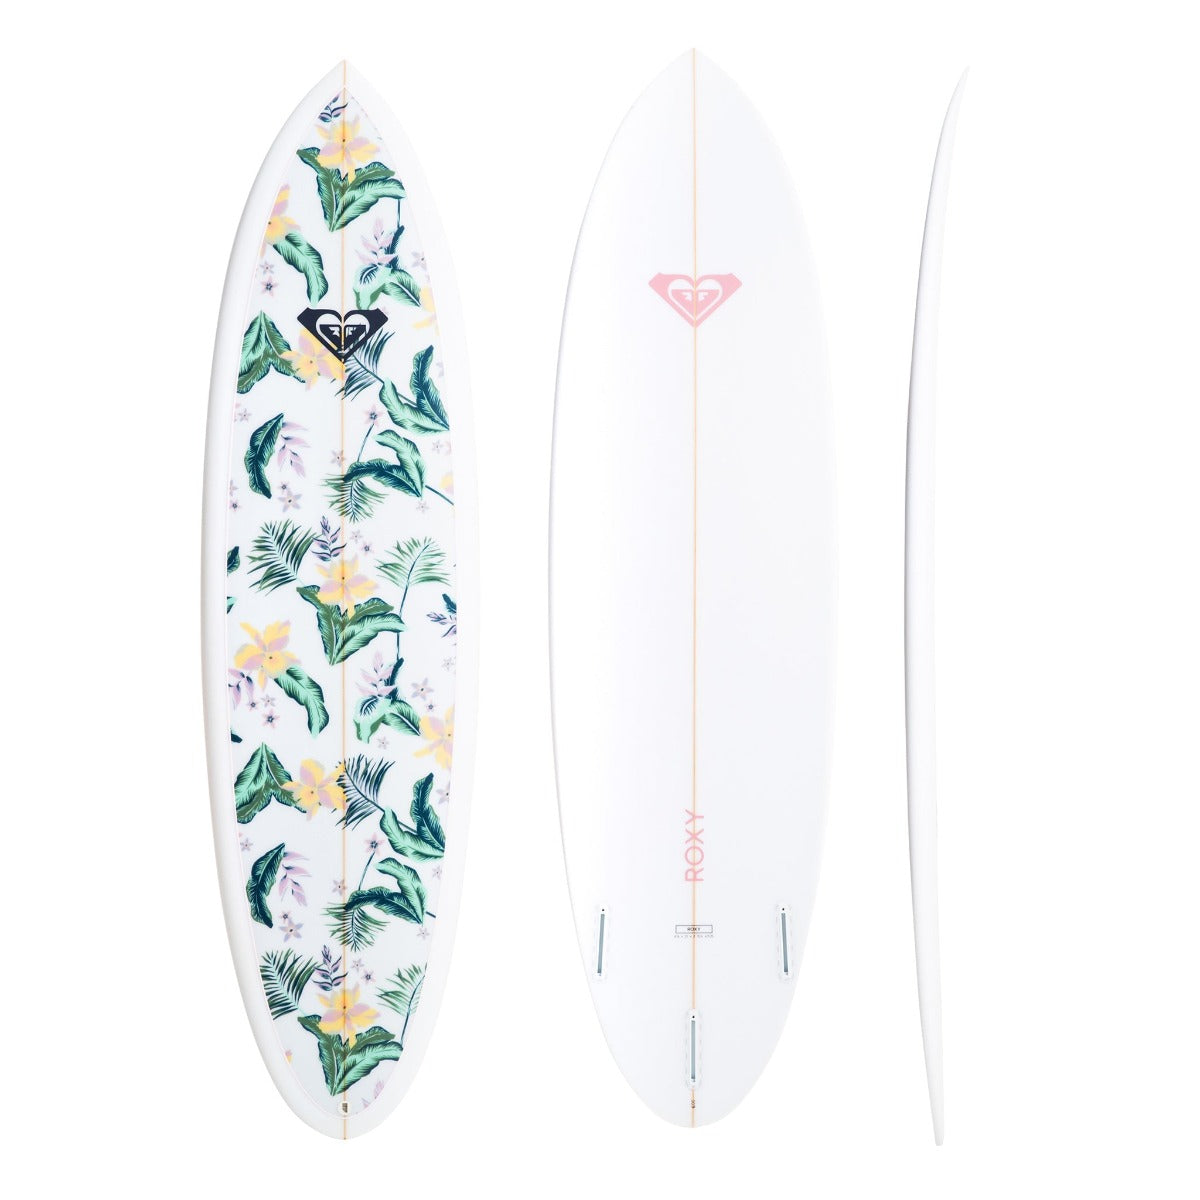 roxy-egg-floral-design-surfboard-6-2-galway-ireland-blacksheepsurfco